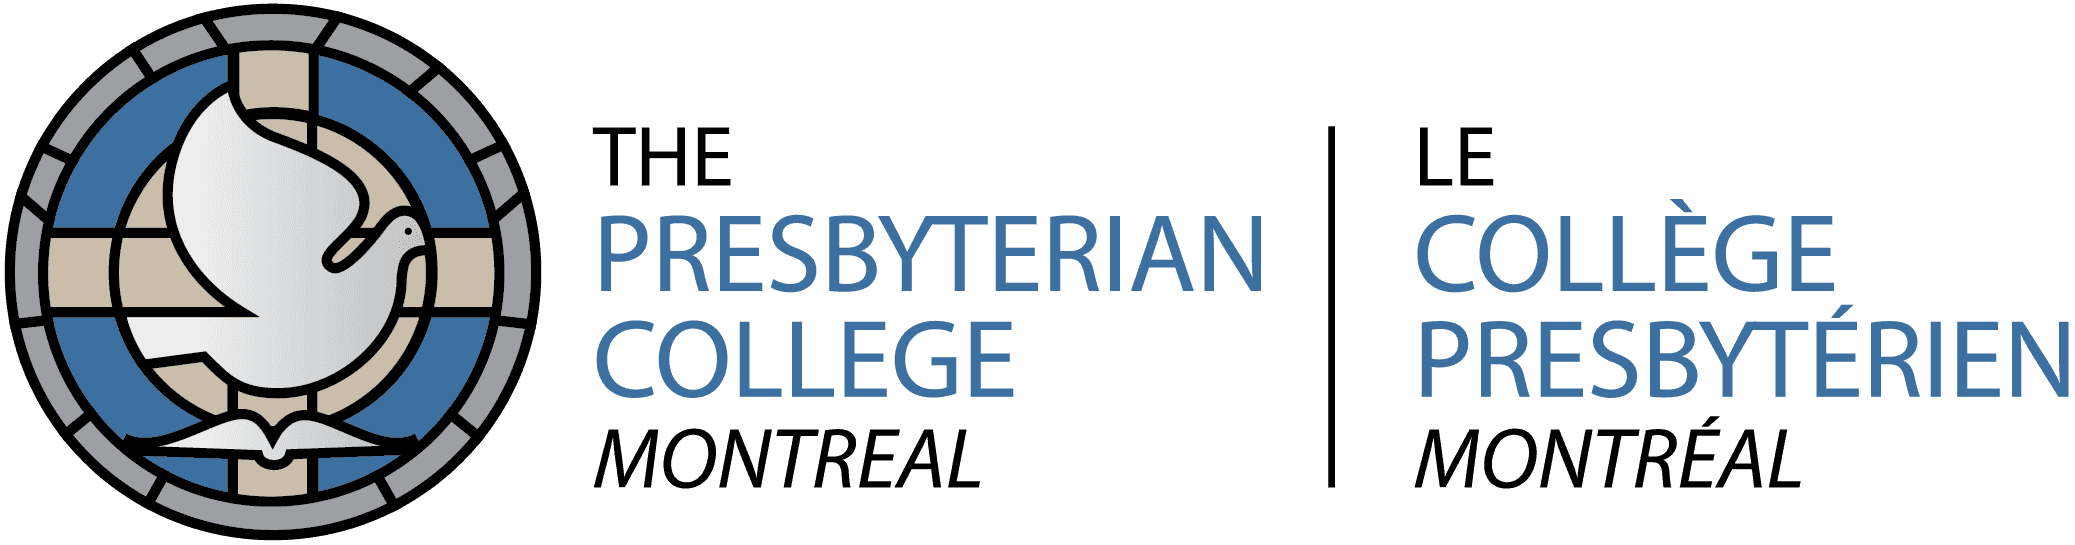 The Presbyterian College, Montreal, logo